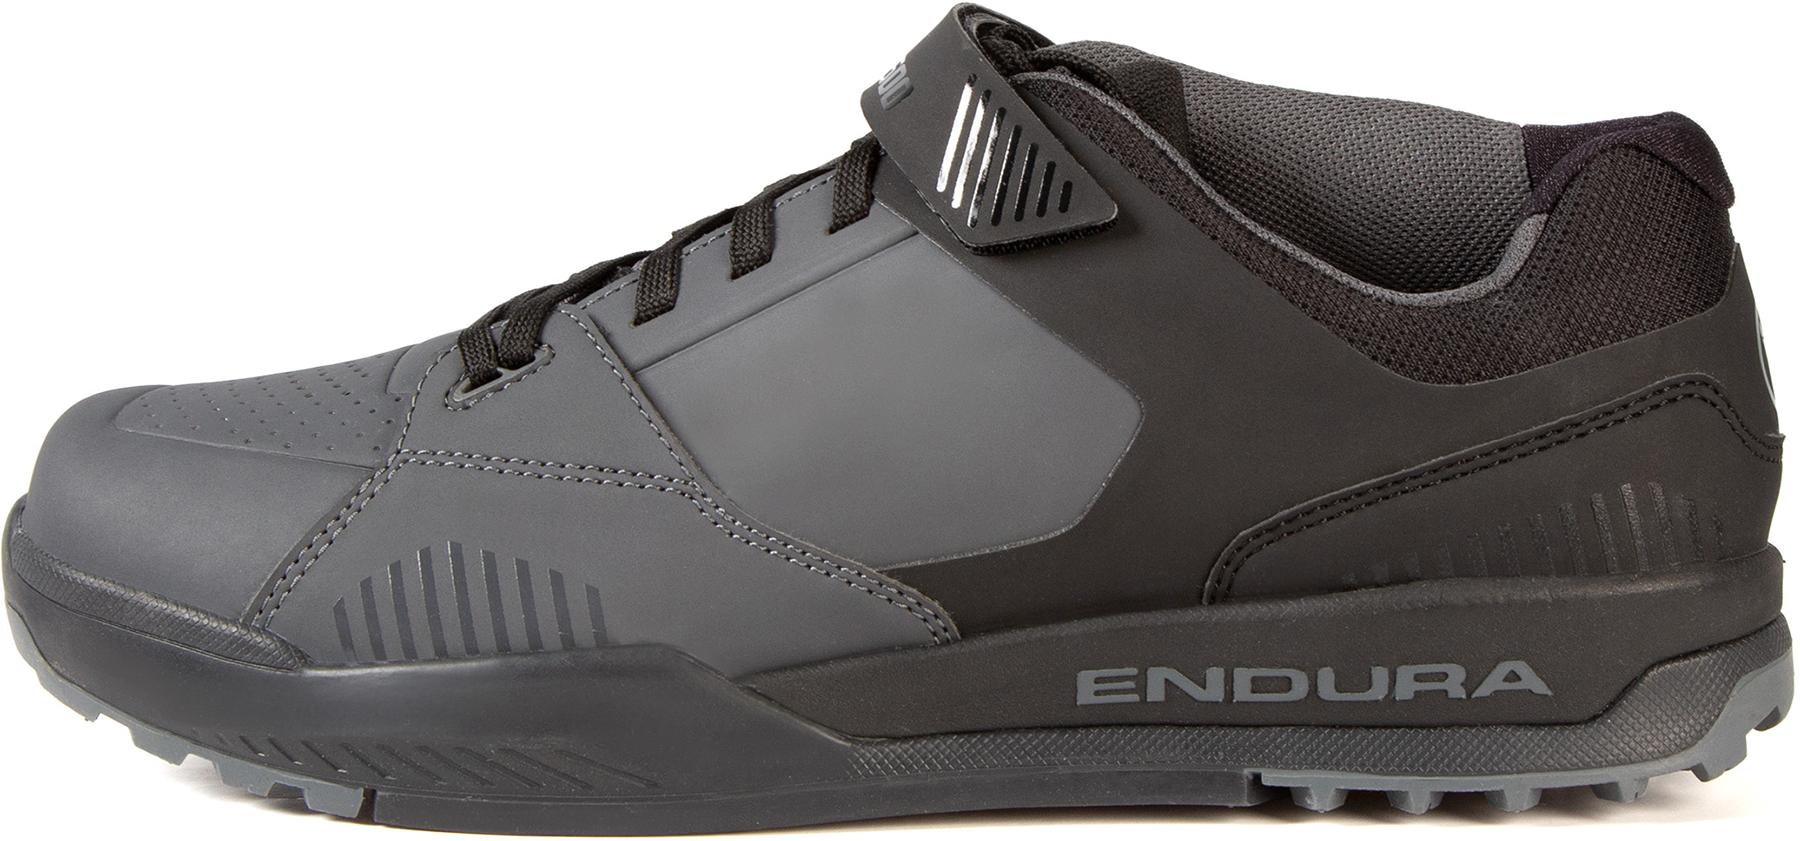 Endura - MT500 Burner | cycling shoes